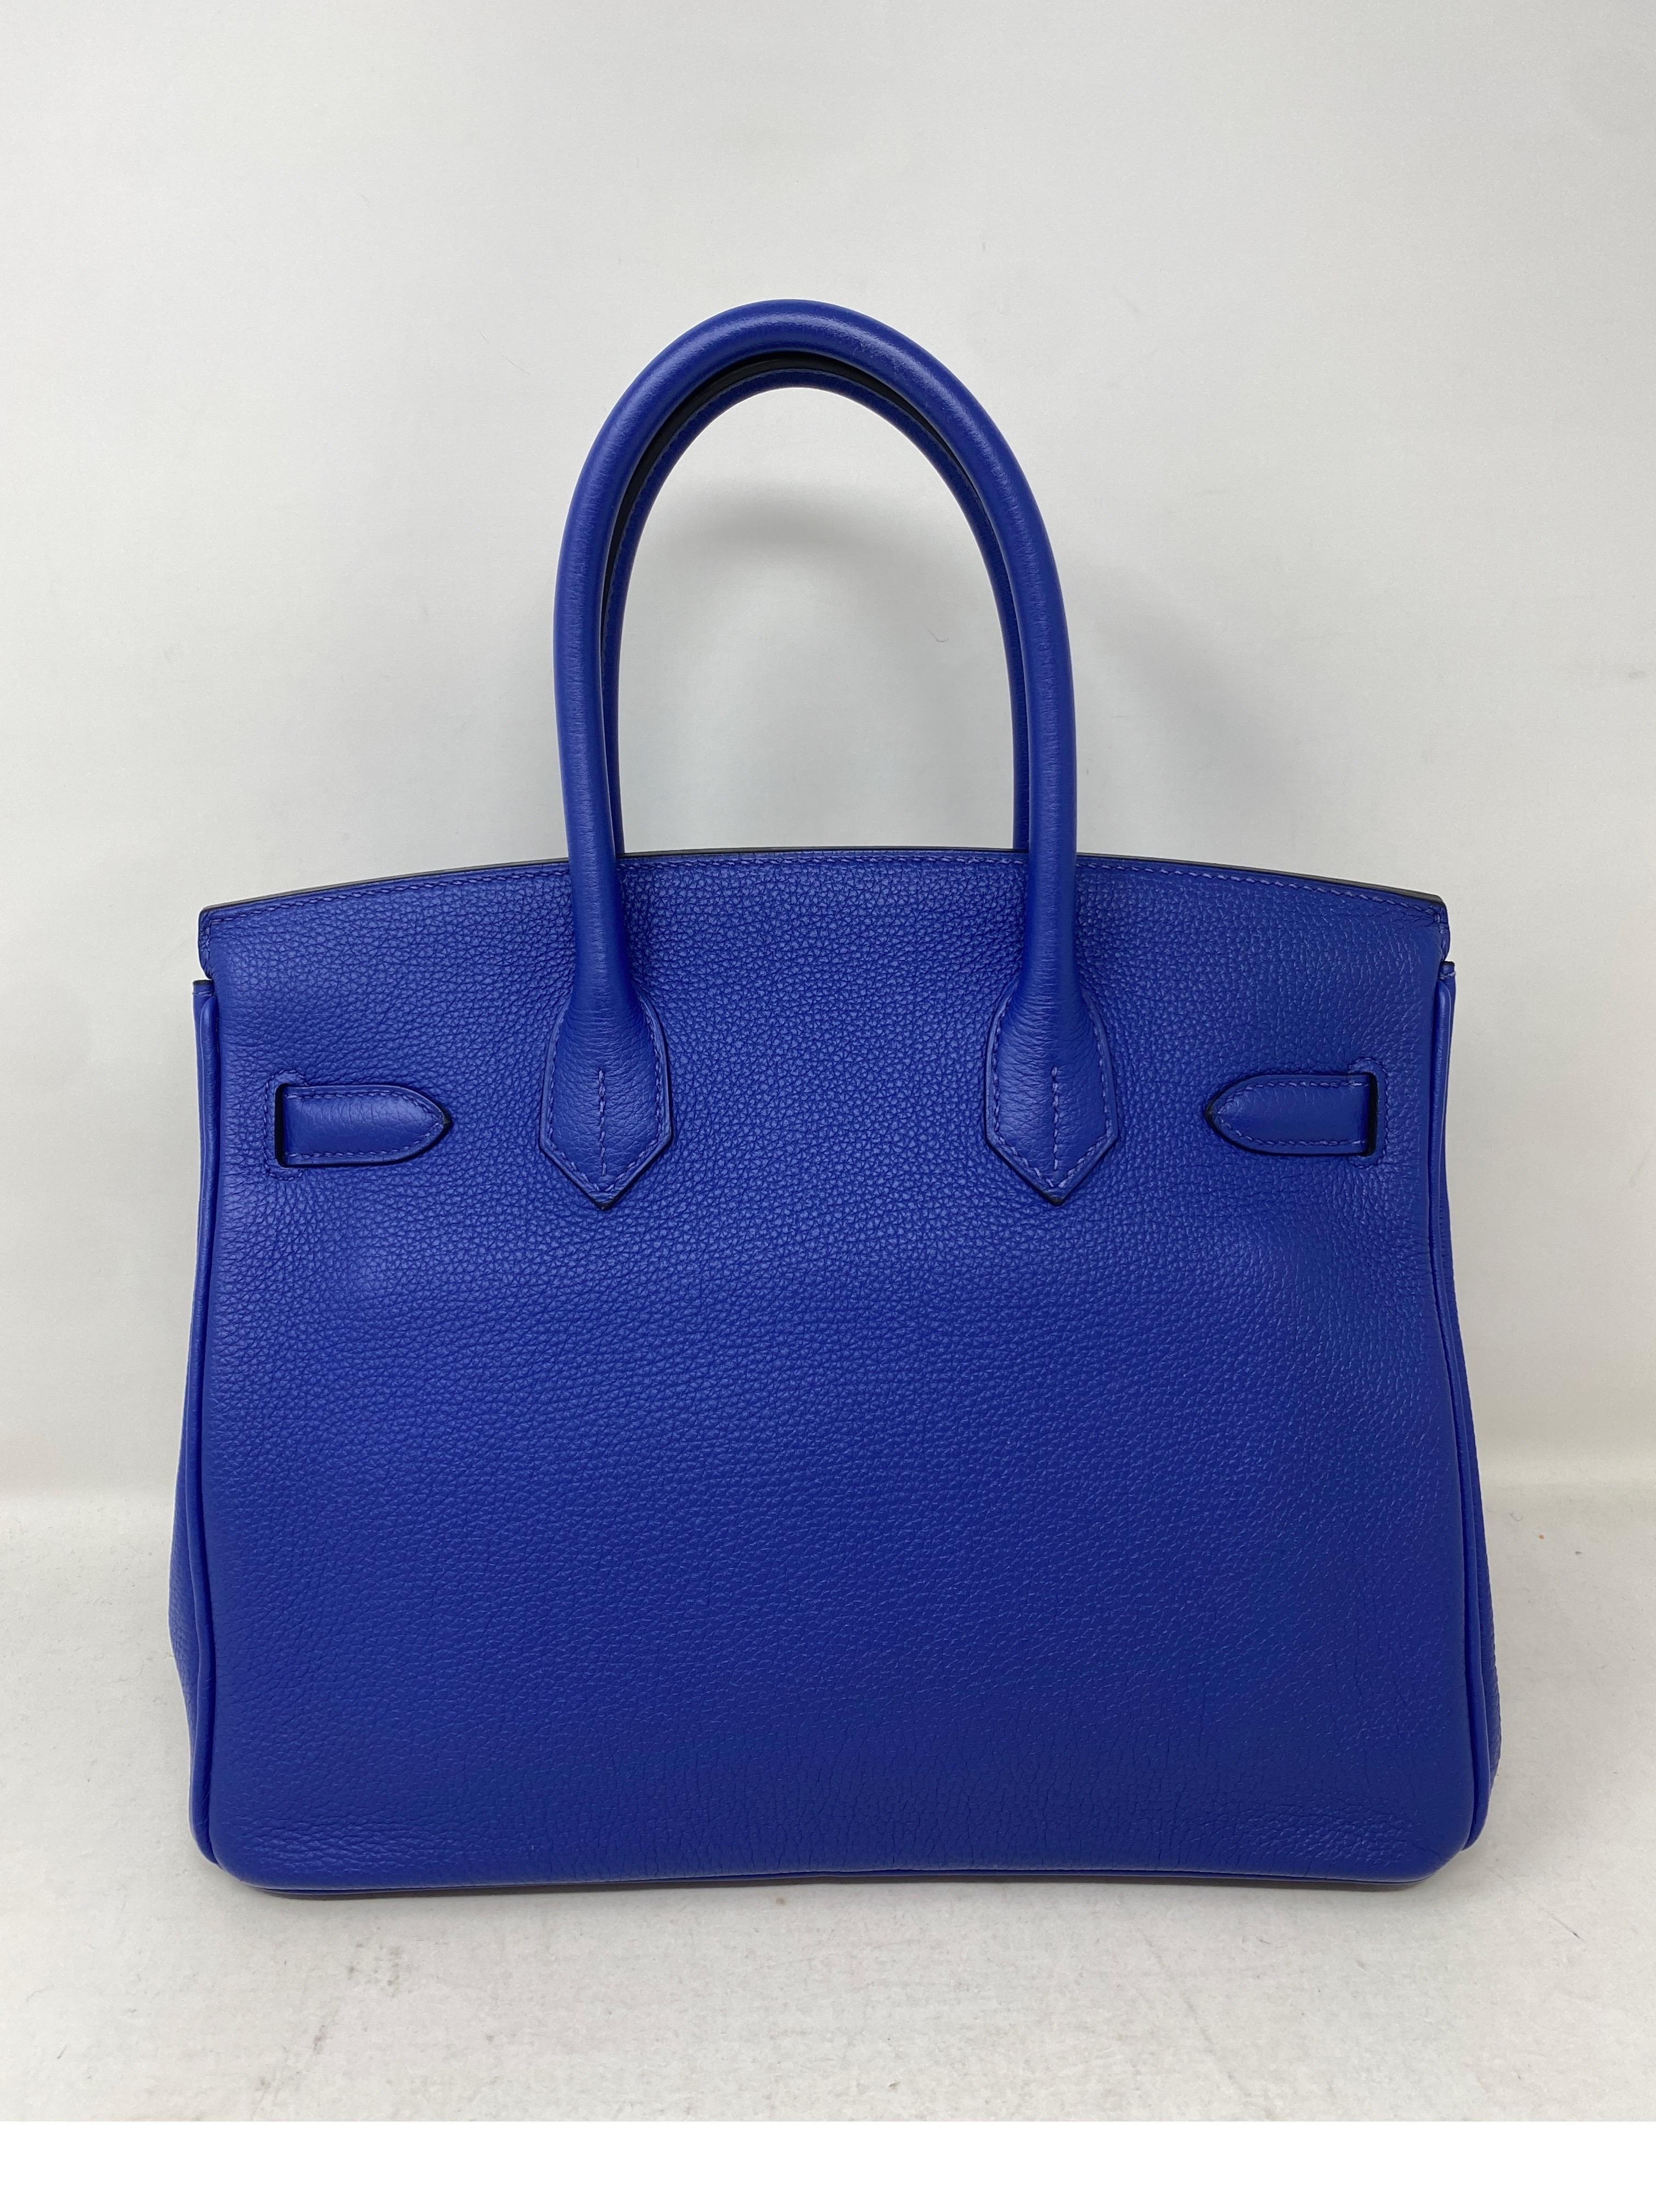 Hermès - Sac Birkin 35 Electrique bleu  3